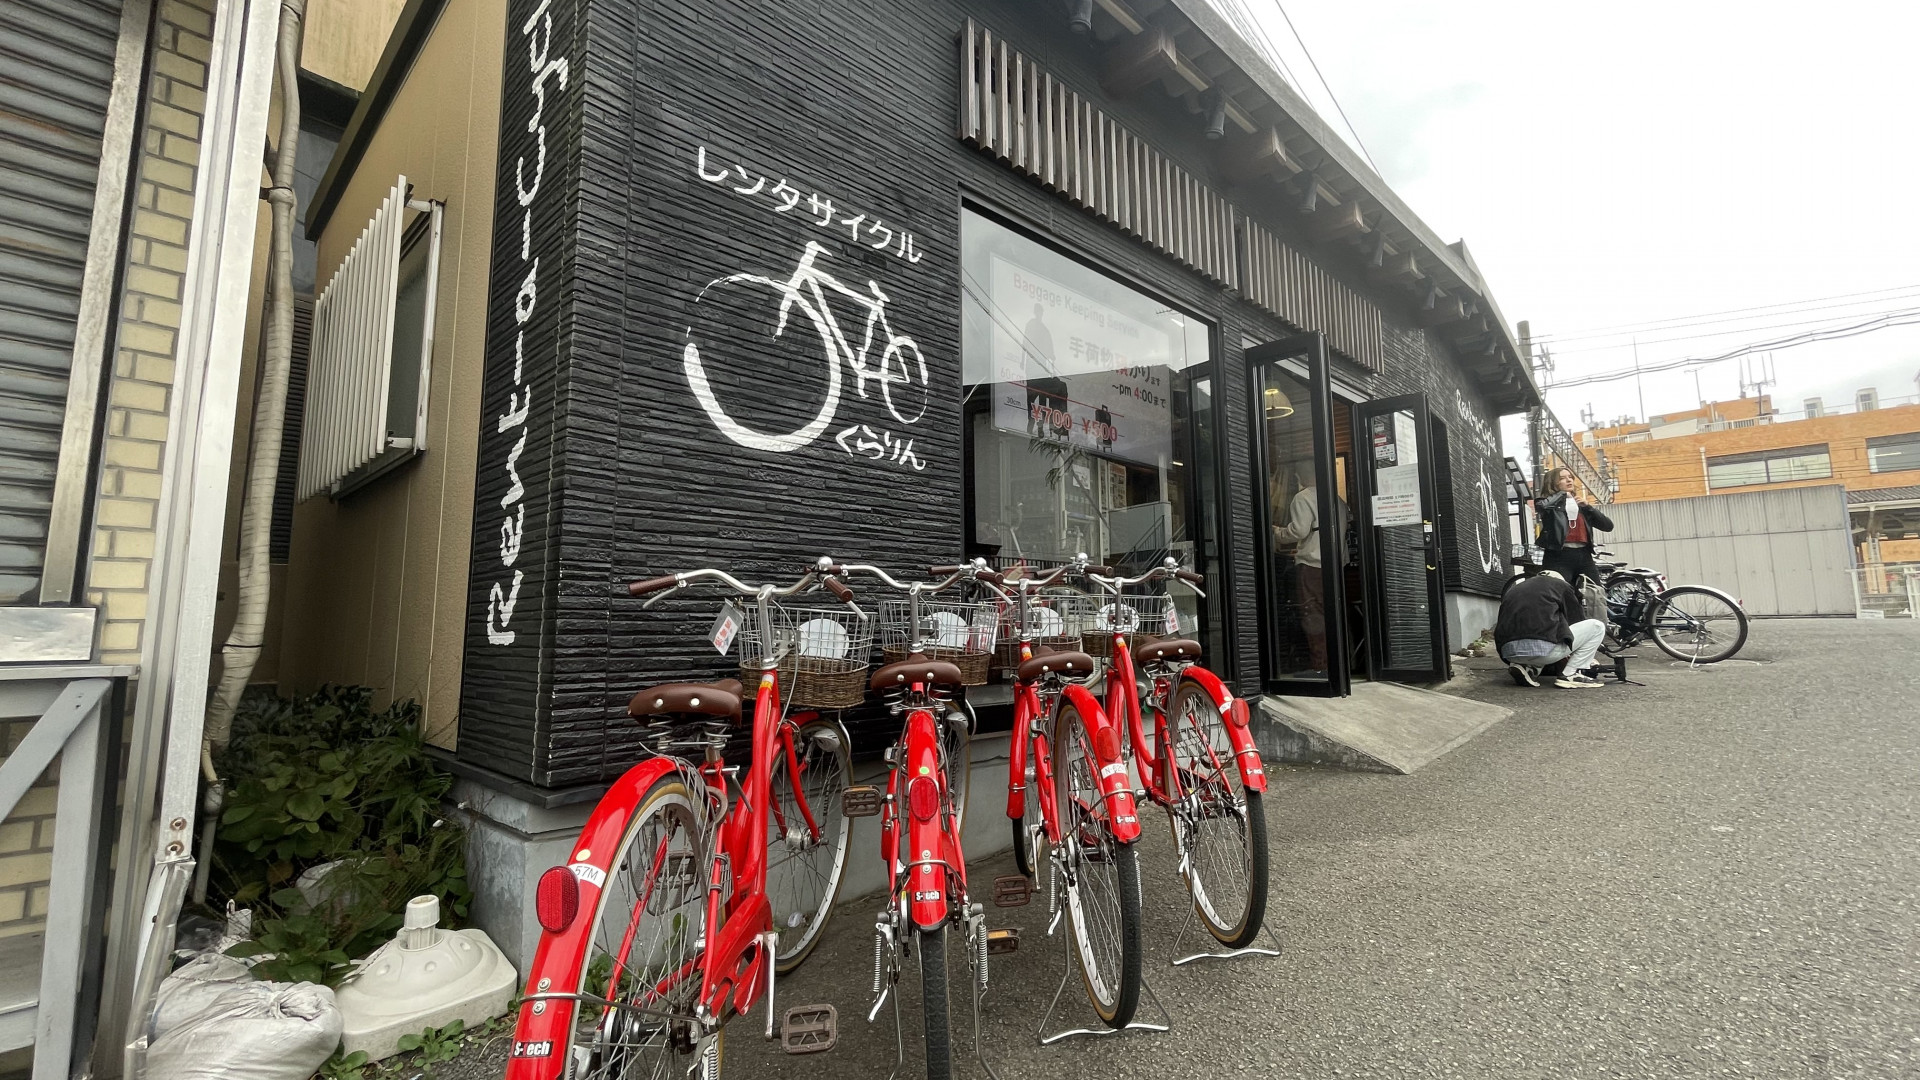 Kamakura Rent-a-Cycle Shop